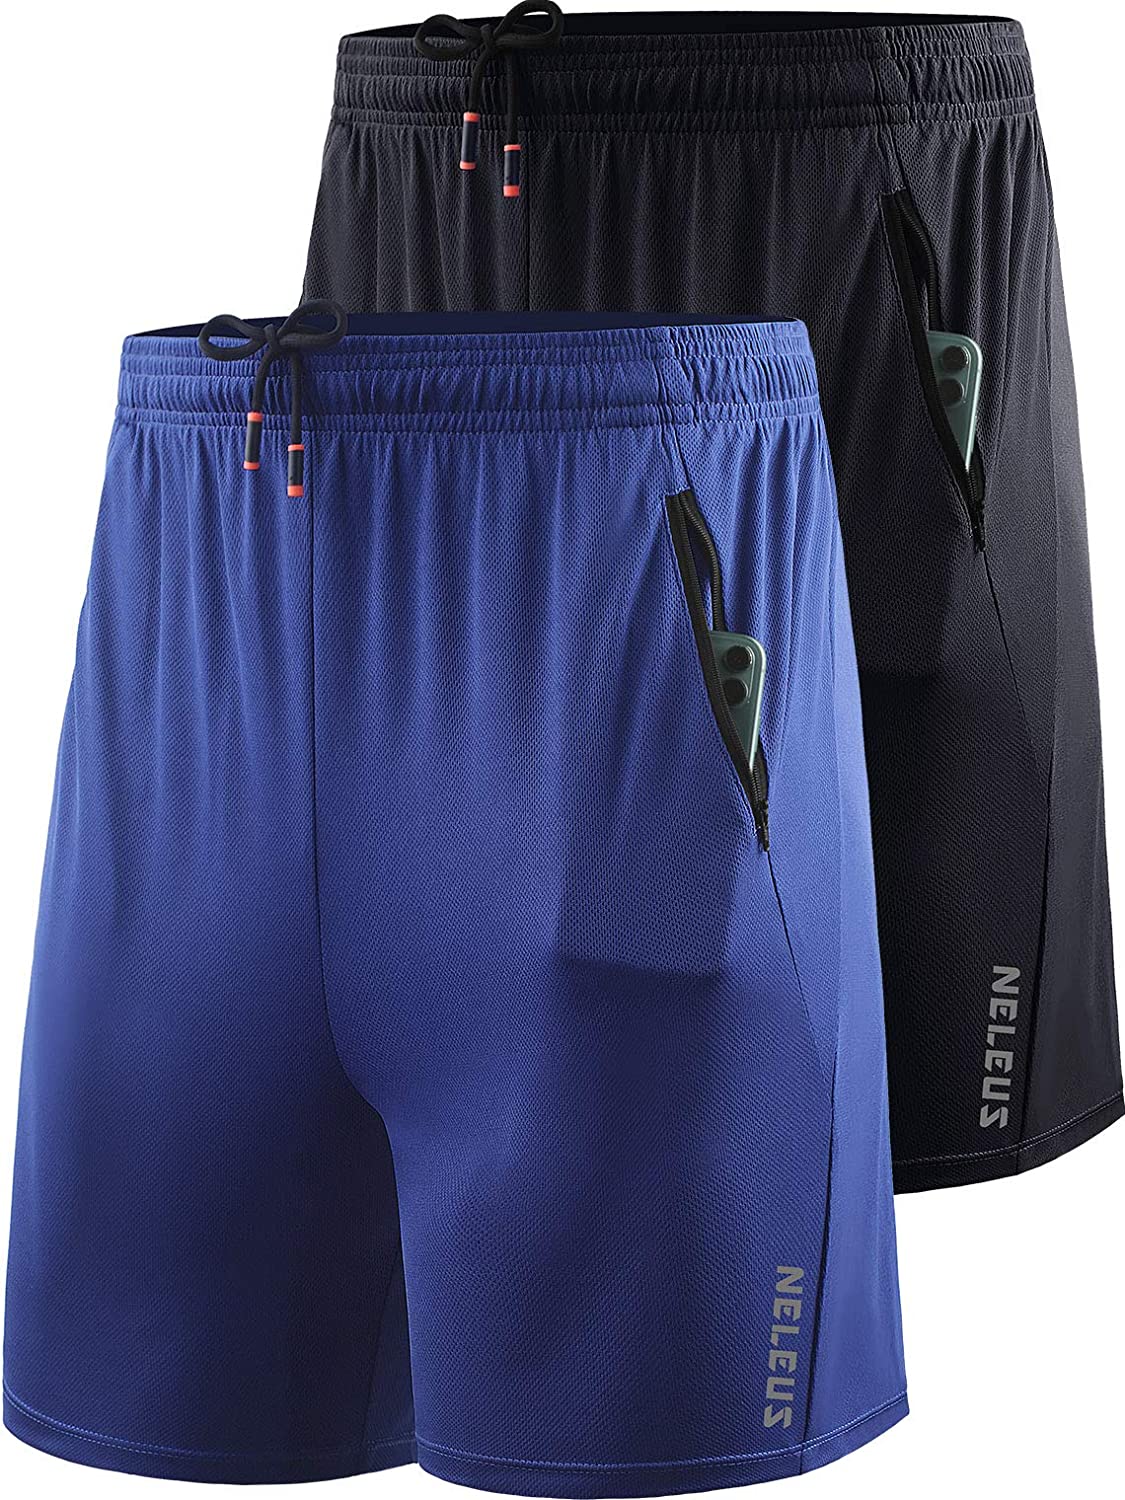 Neleus Men's 7 inch Running Shorts Lightweight Workout Shorts with